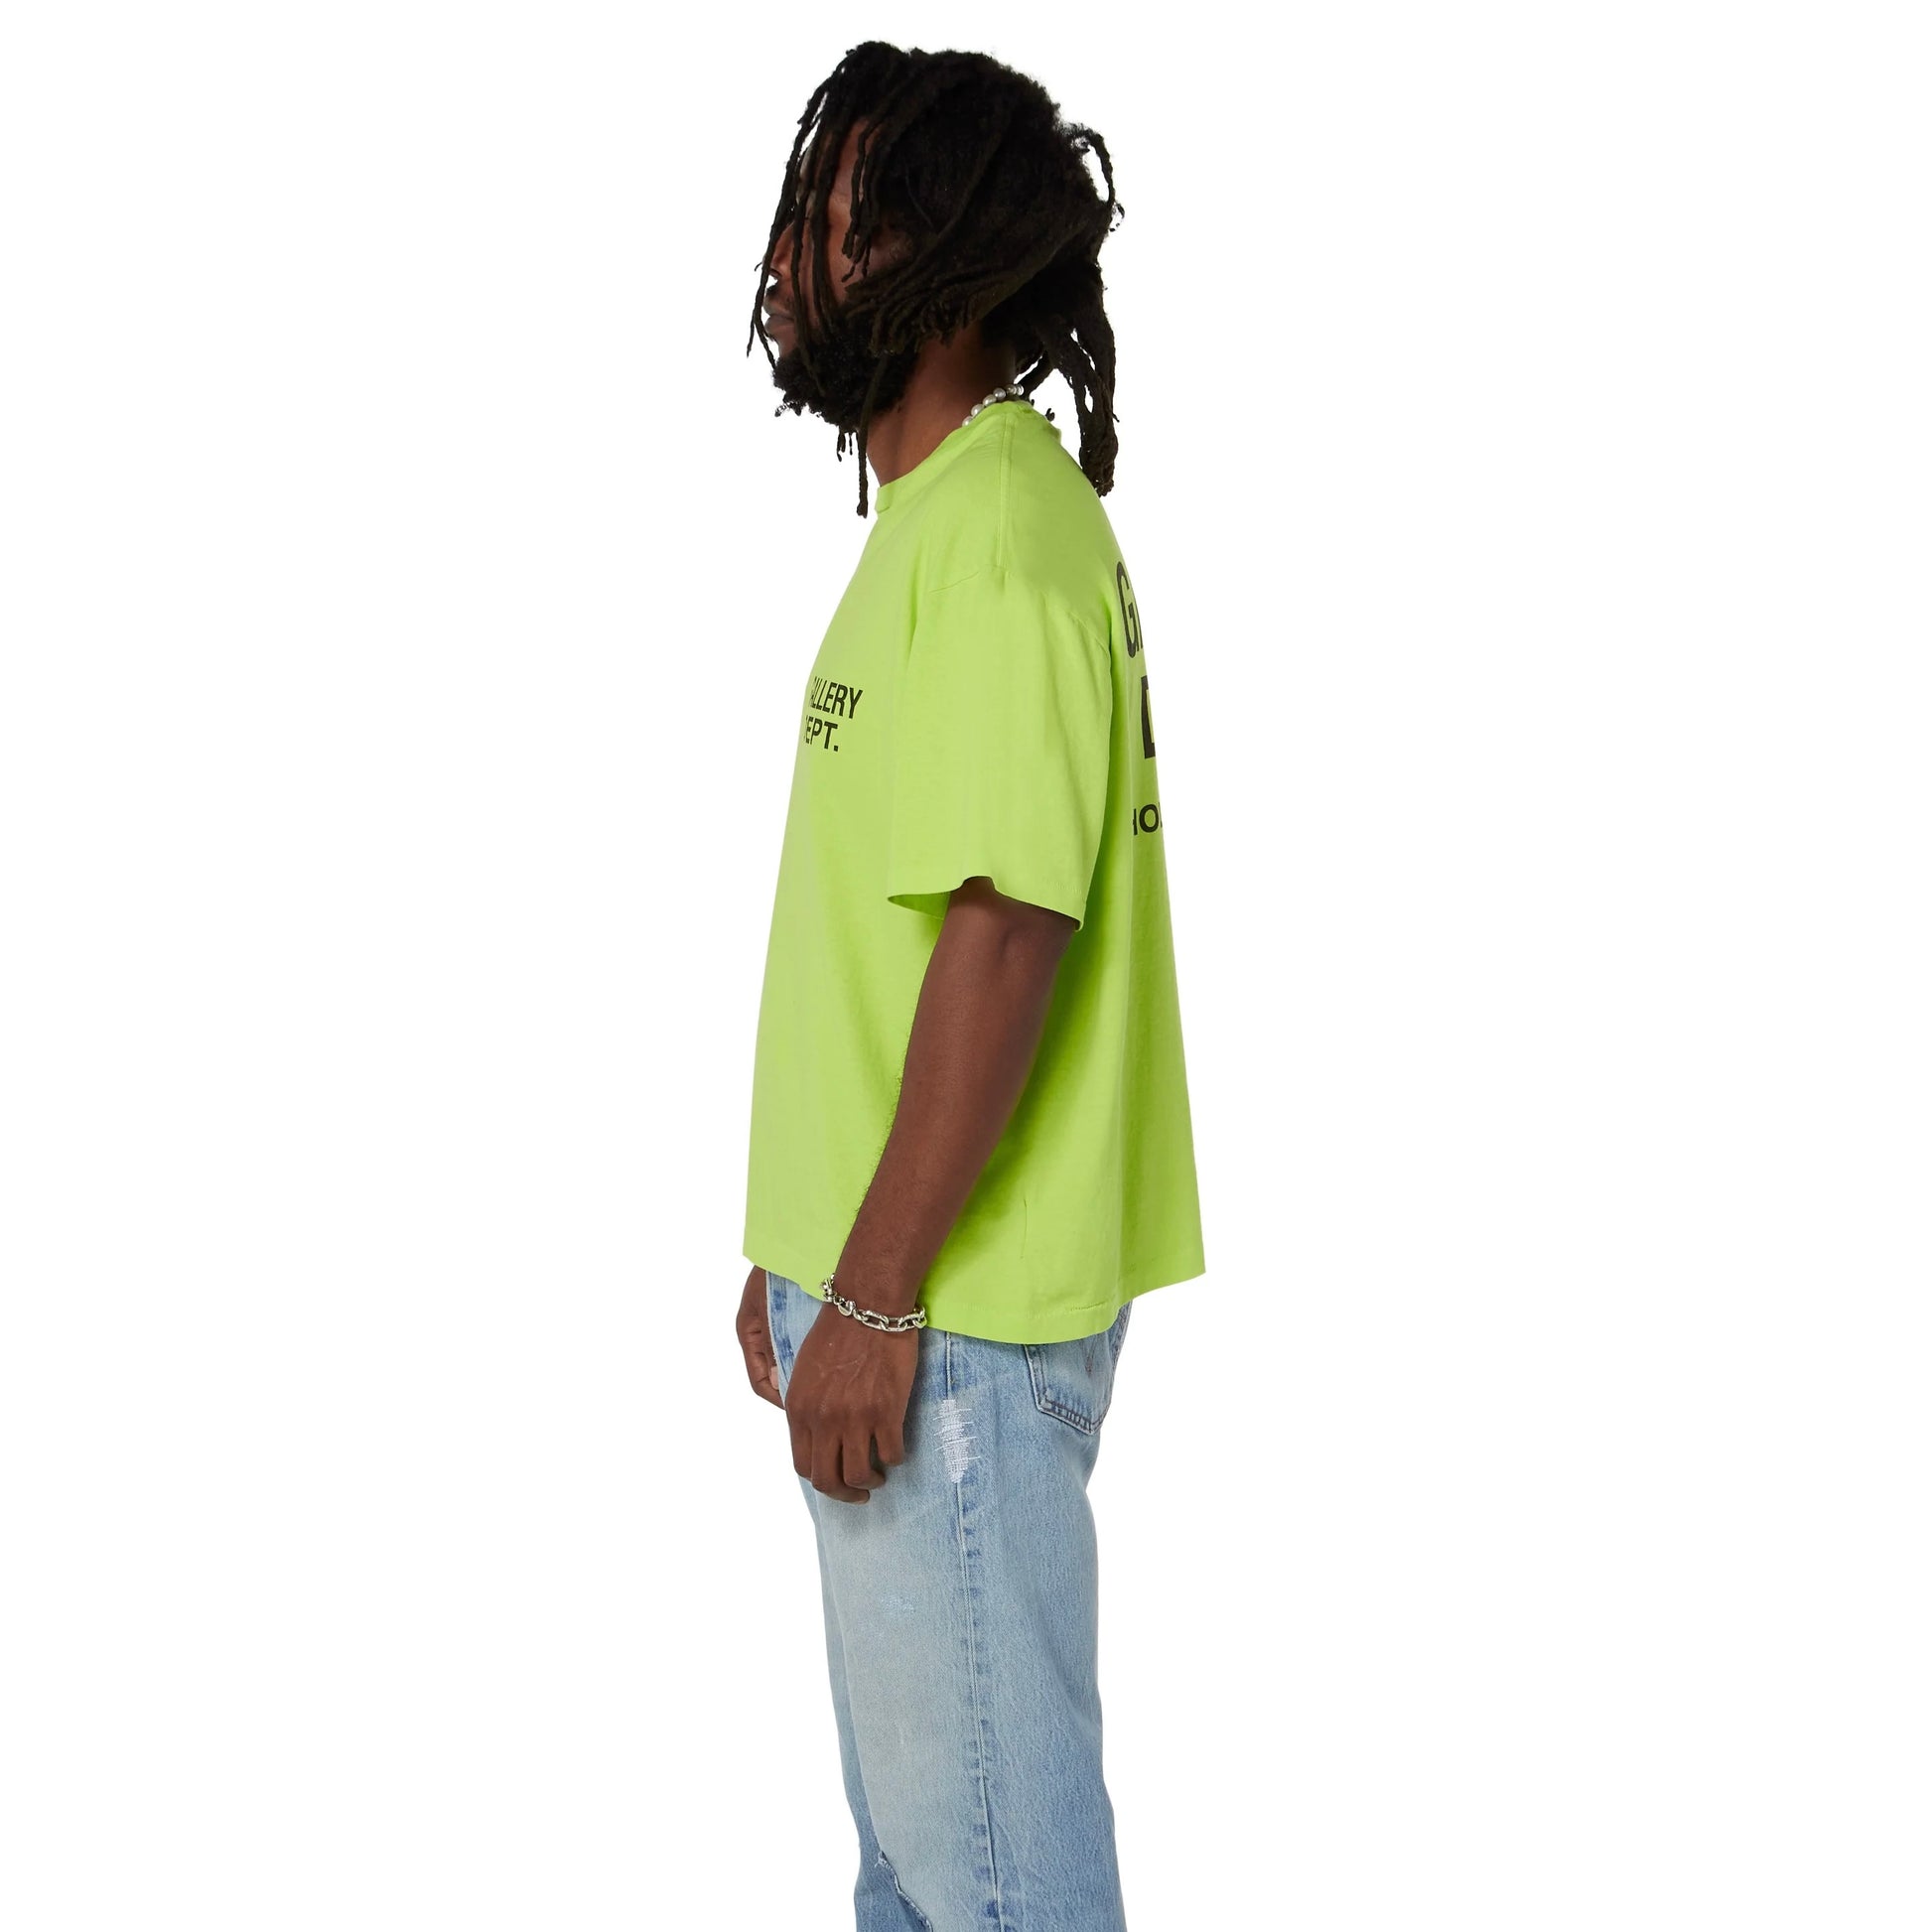 Gallery Dept Lime Green Souvenir T-Shirt On Body View 2